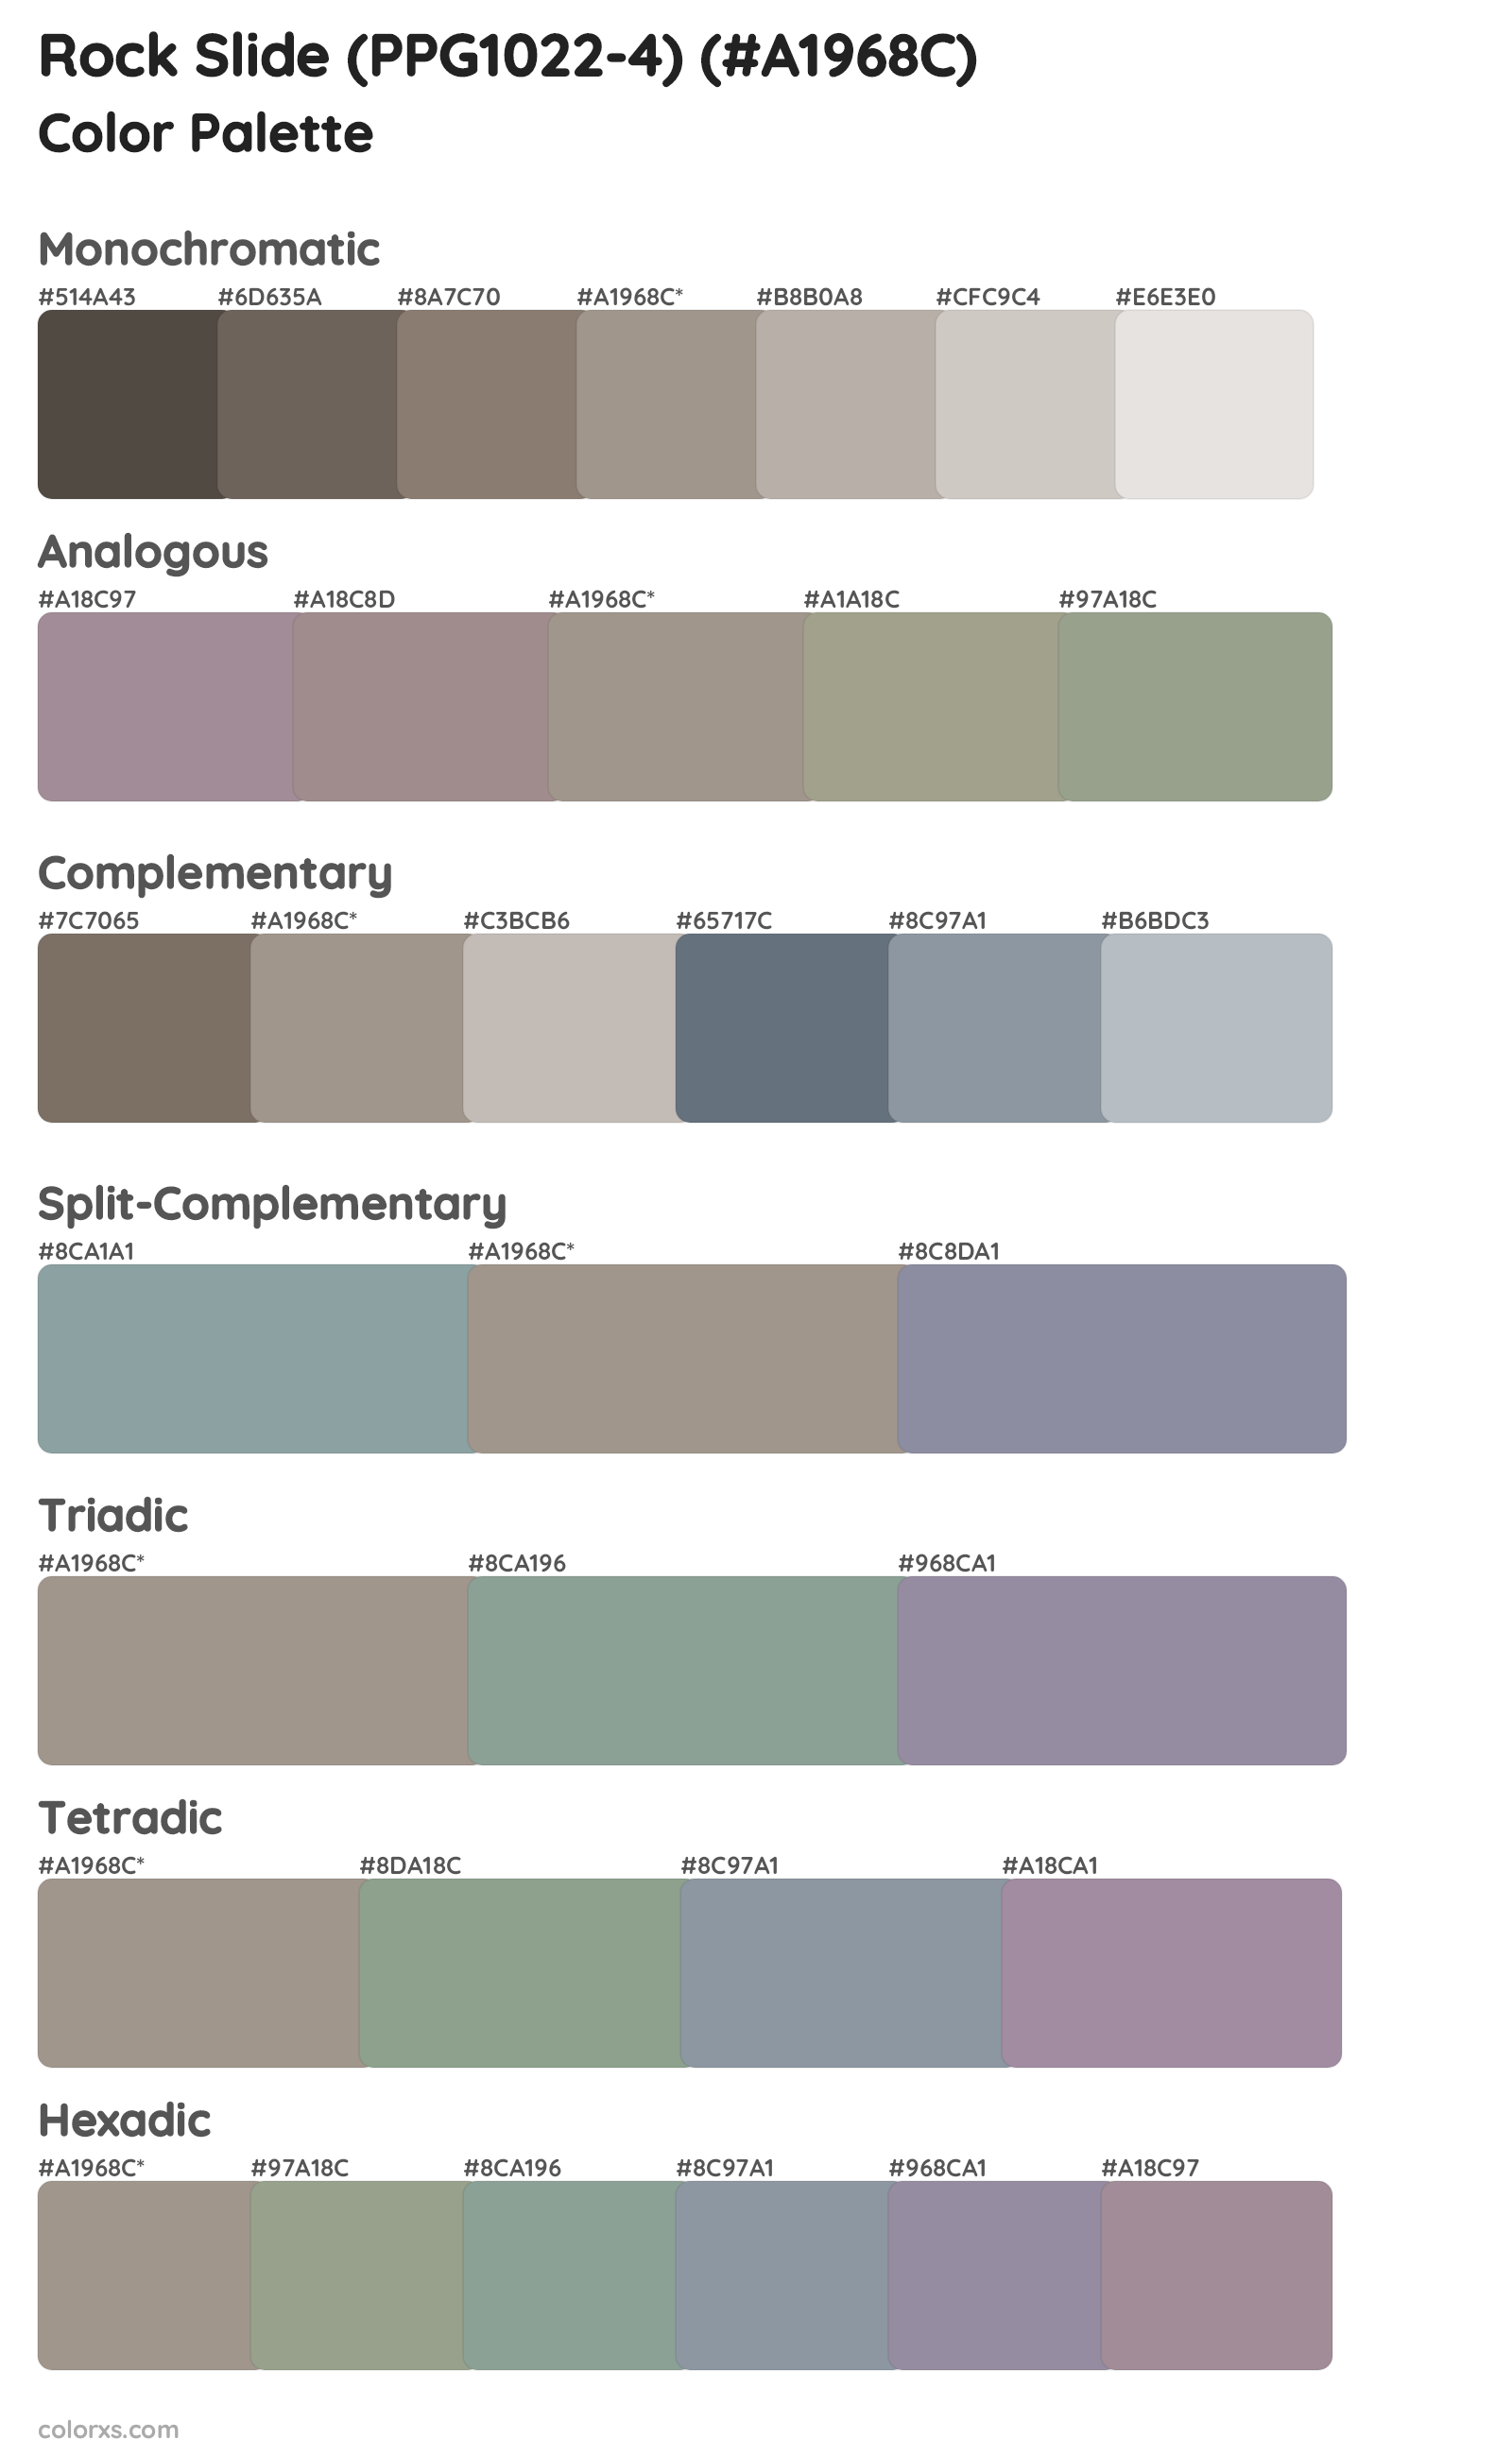 Rock Slide (PPG1022-4) Color Scheme Palettes